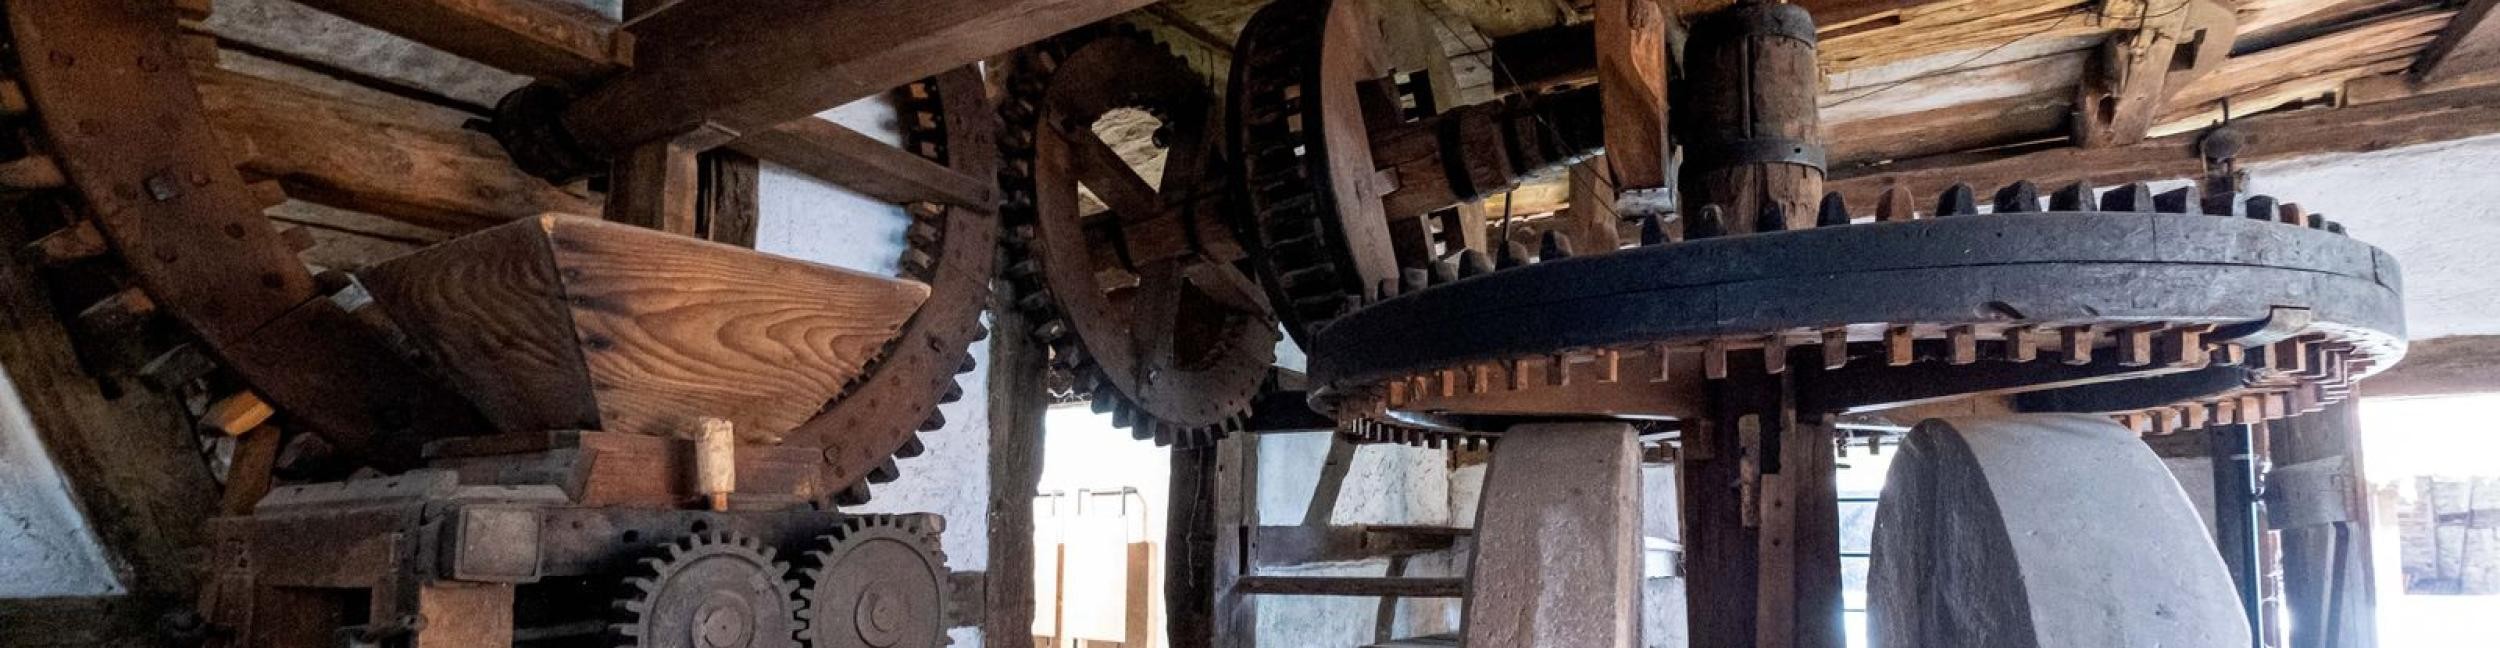 Räderwerk der Ölmühle im Riedmuseum Rastatt.